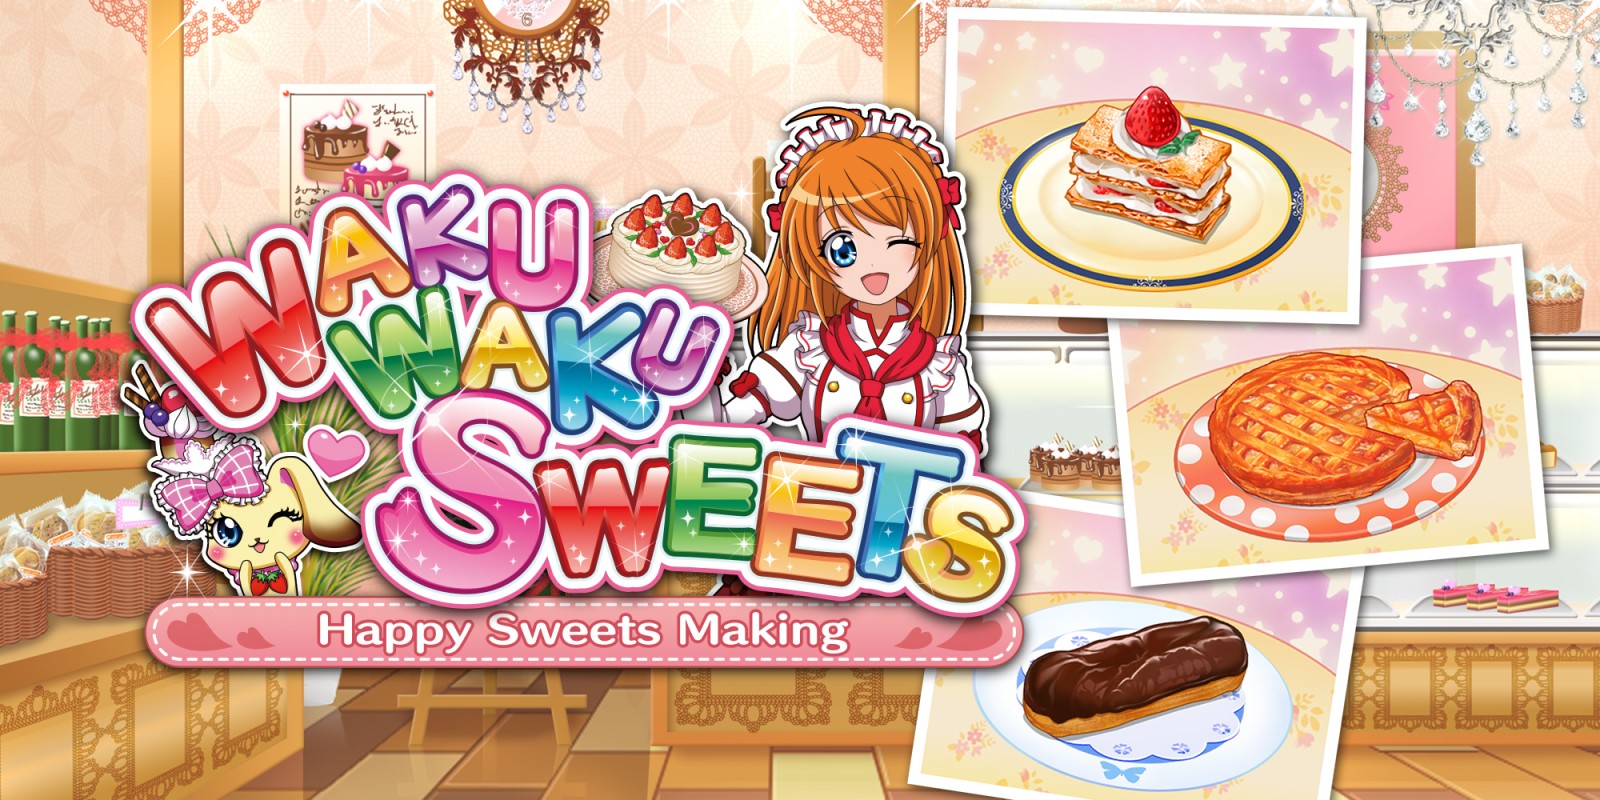 WAKU WAKU SWEETS: Happy Sweets Making